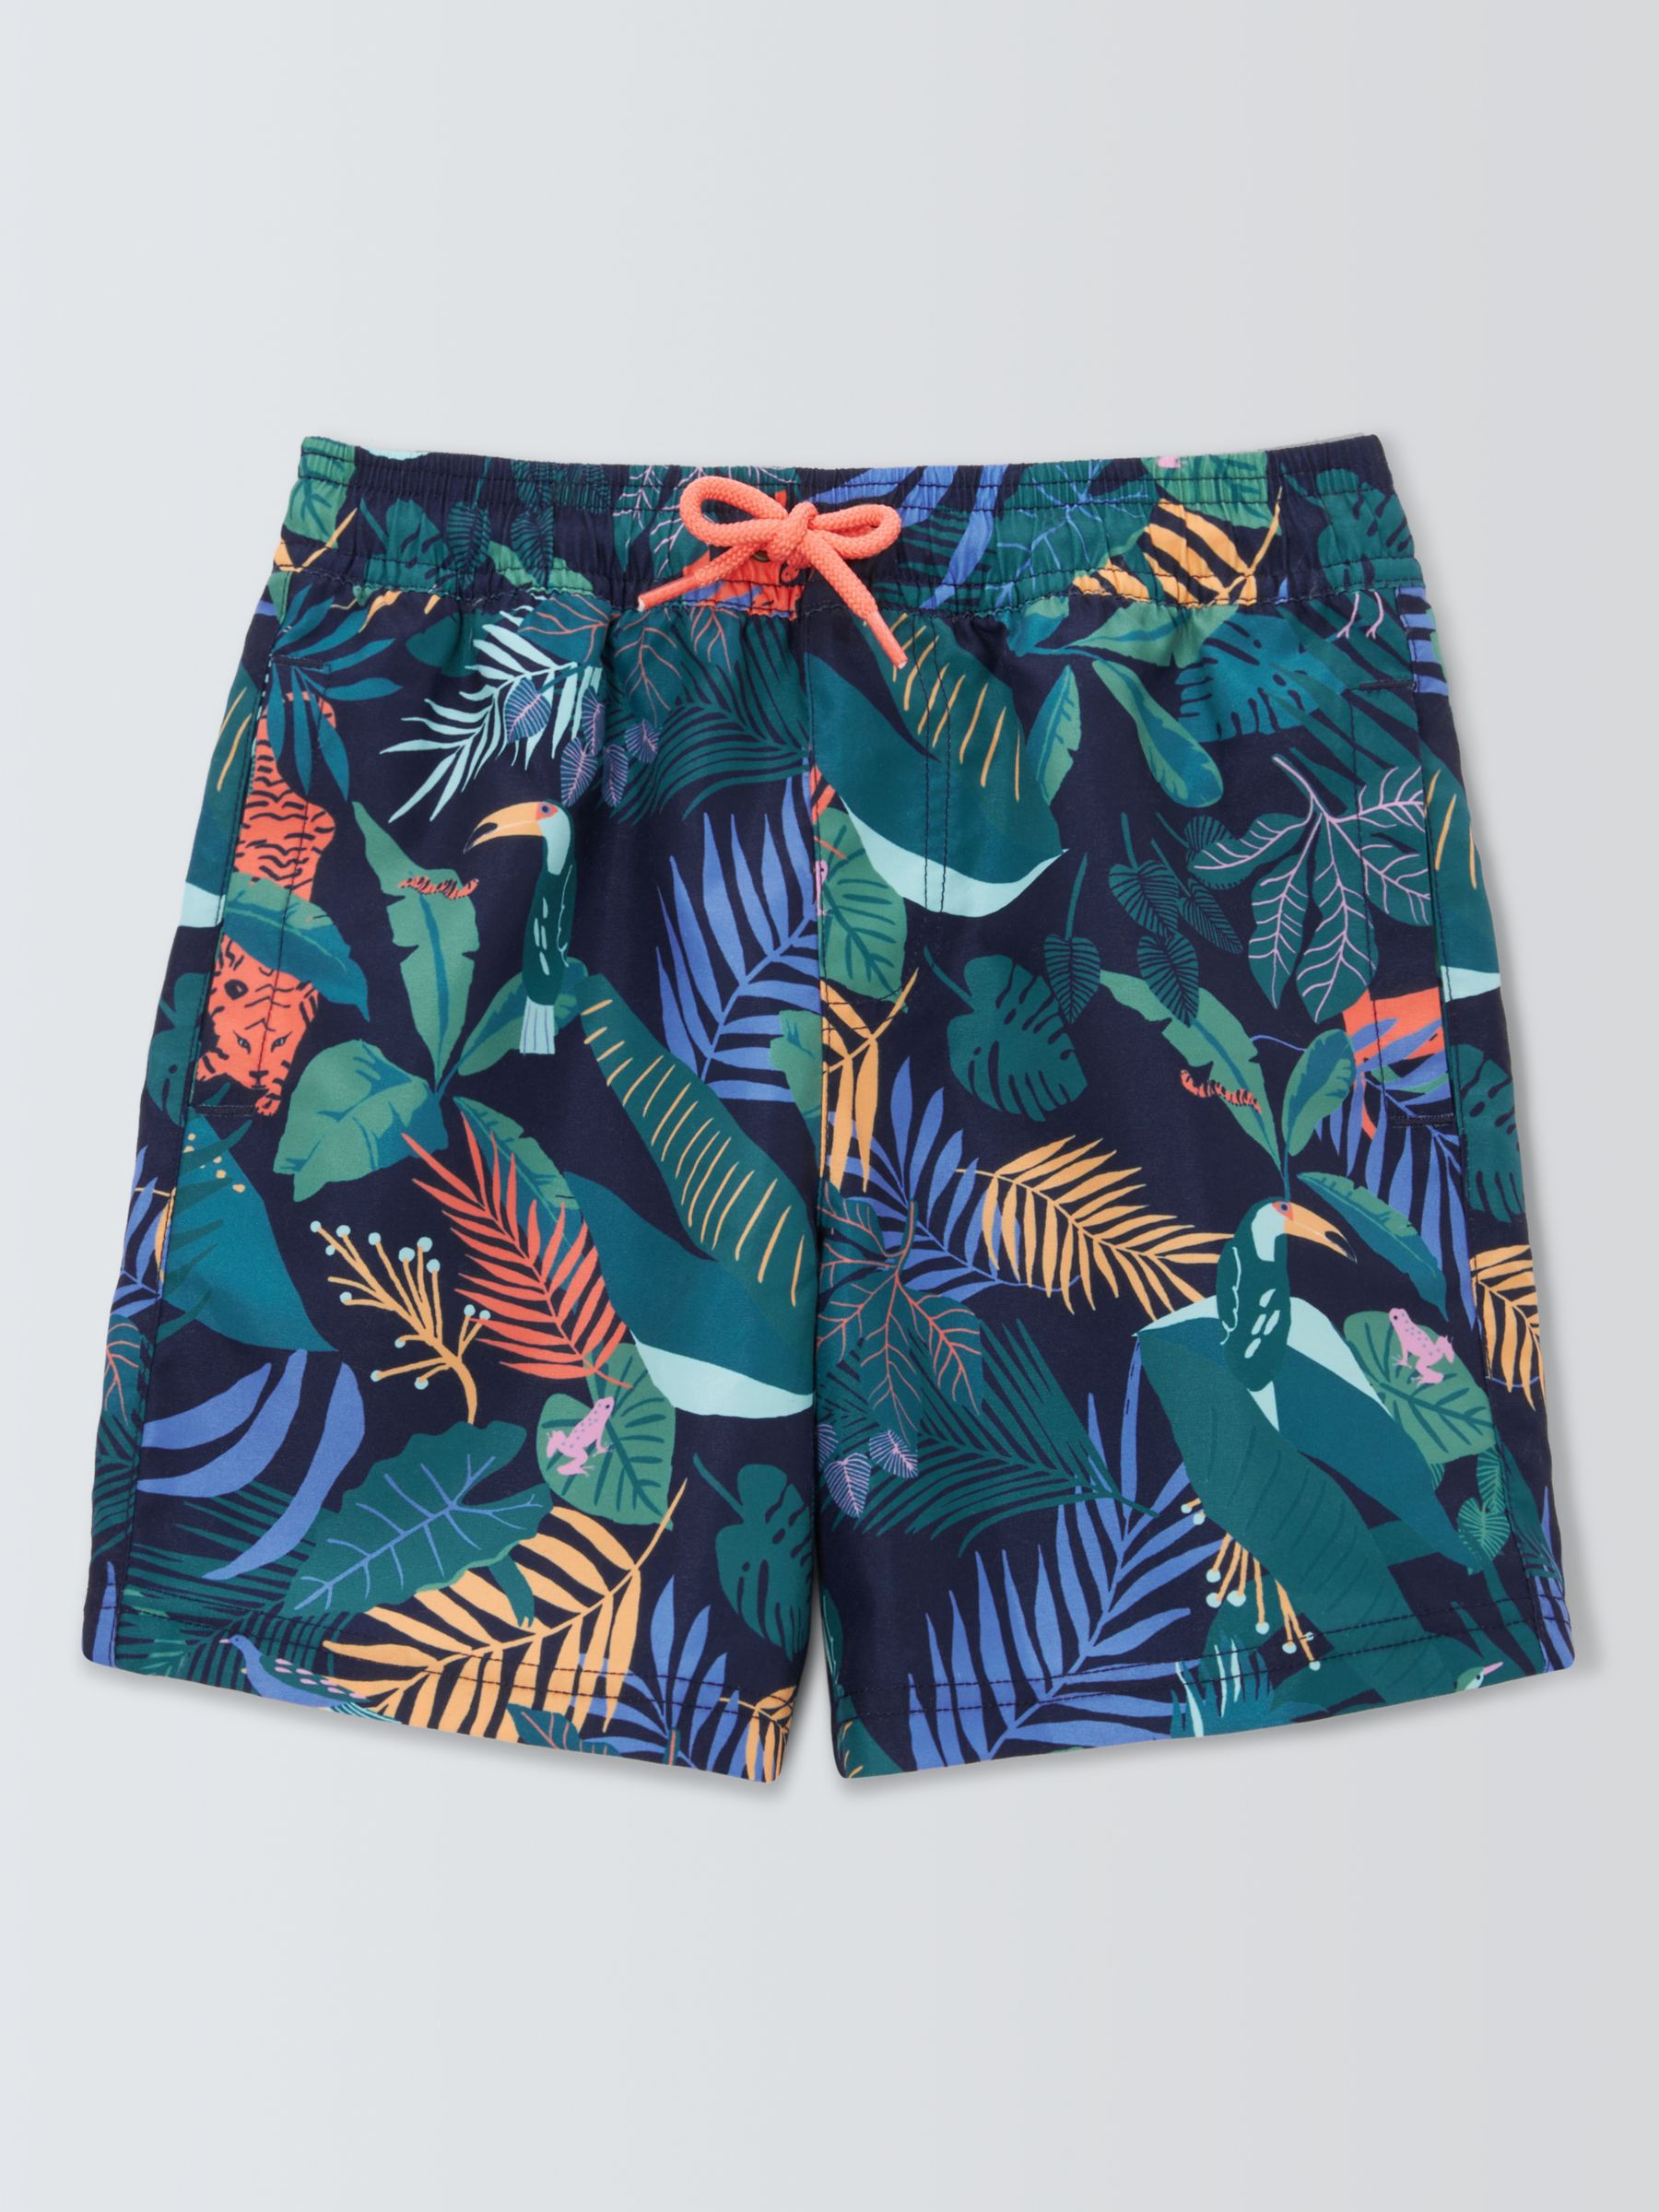 John Lewis Kids' Rainforest Print Swim Shorts, Multi, 7 years